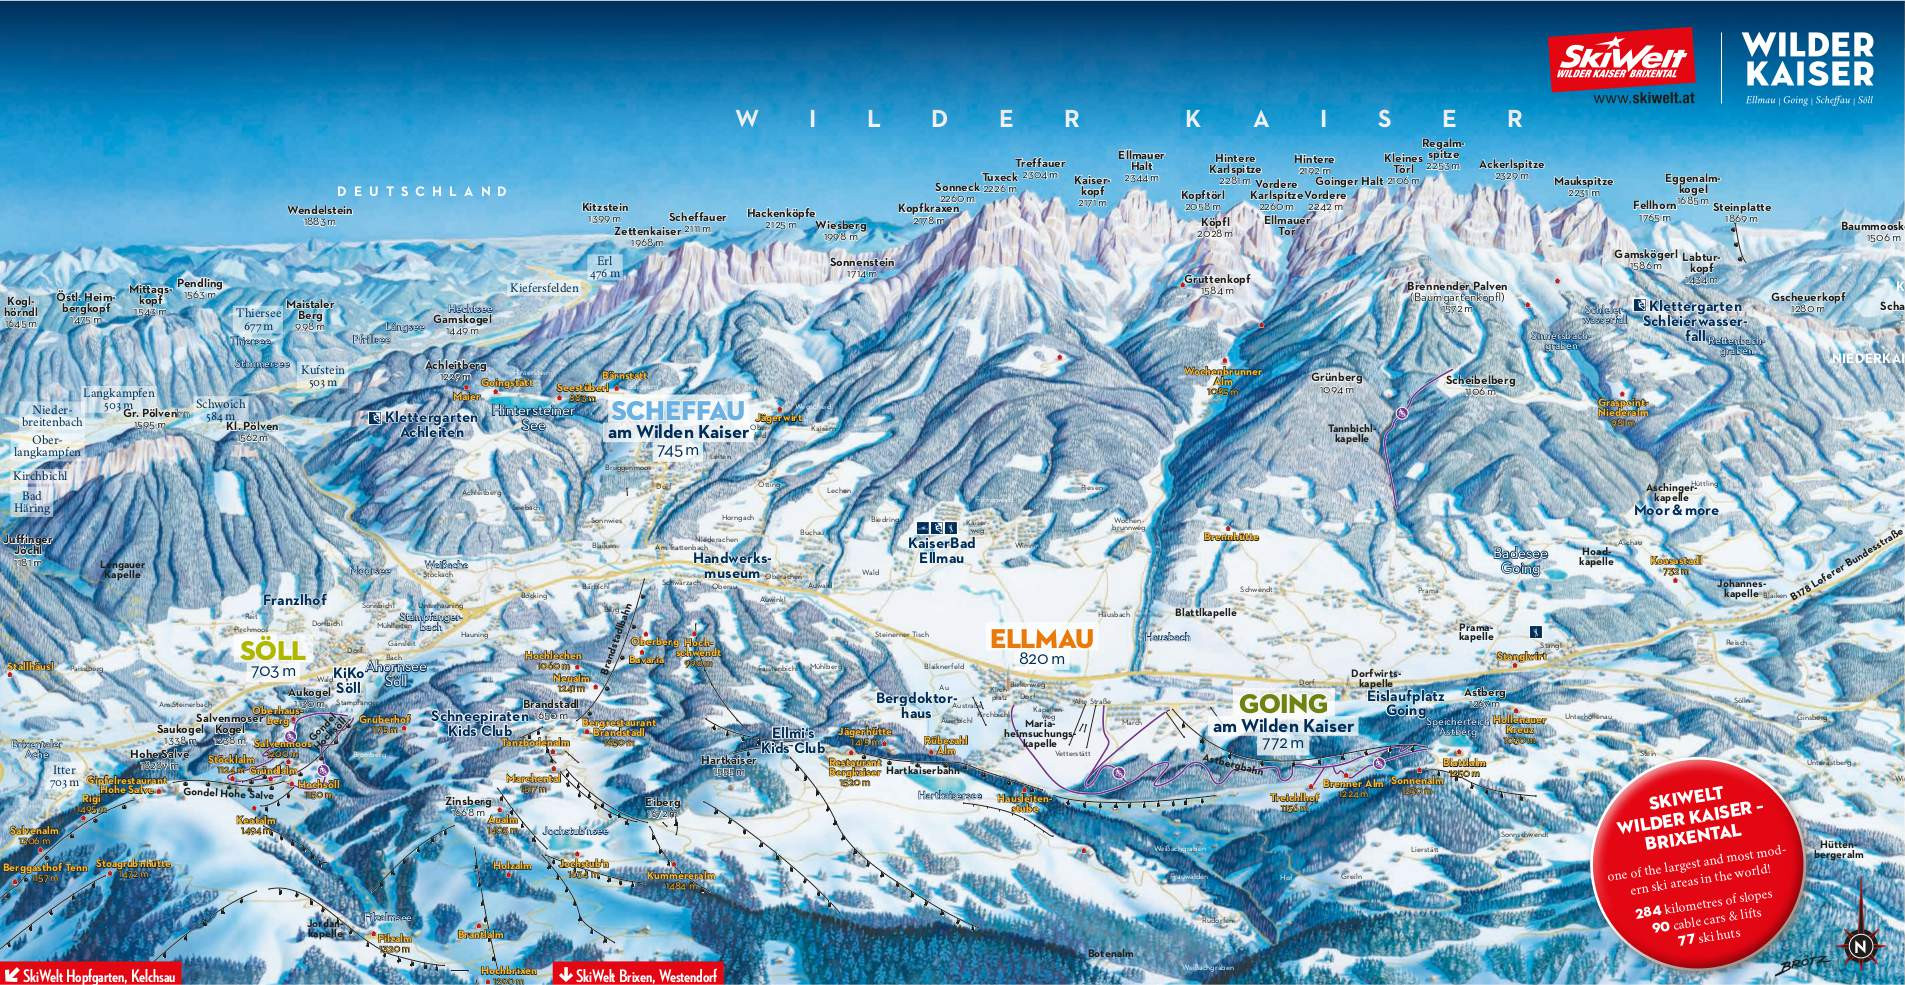 Wilder Kaiser Ski Trail Map Free Download